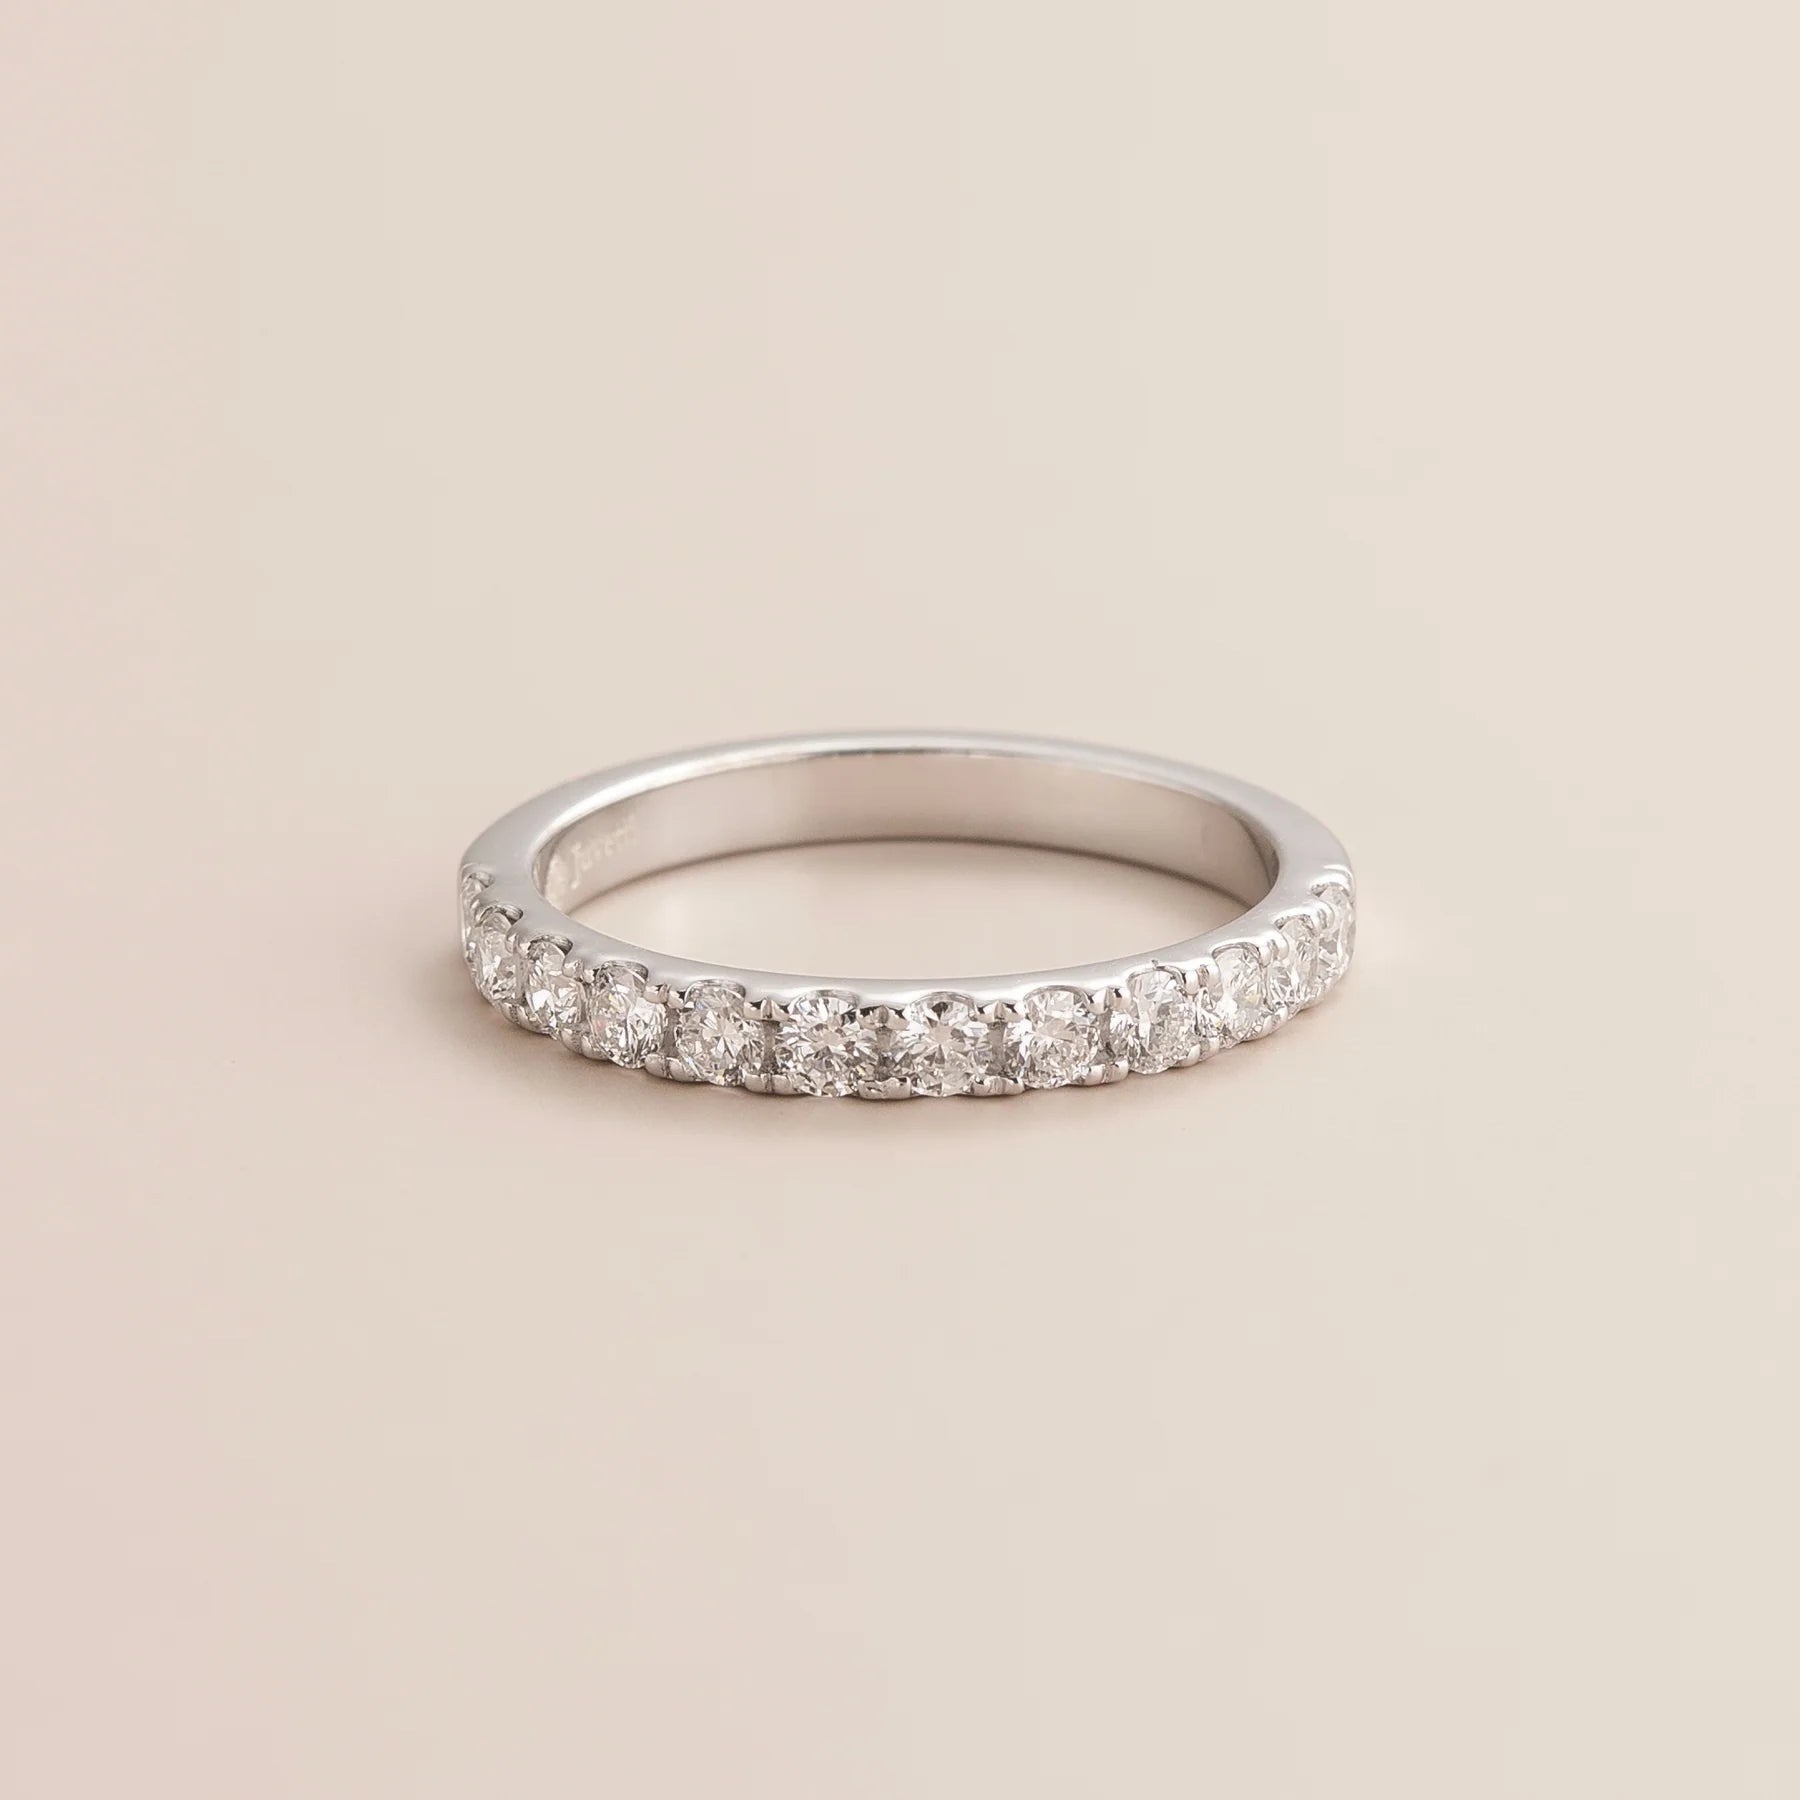 Salto White Gold Ring Set With Diamond By Bespoke Jewellery London